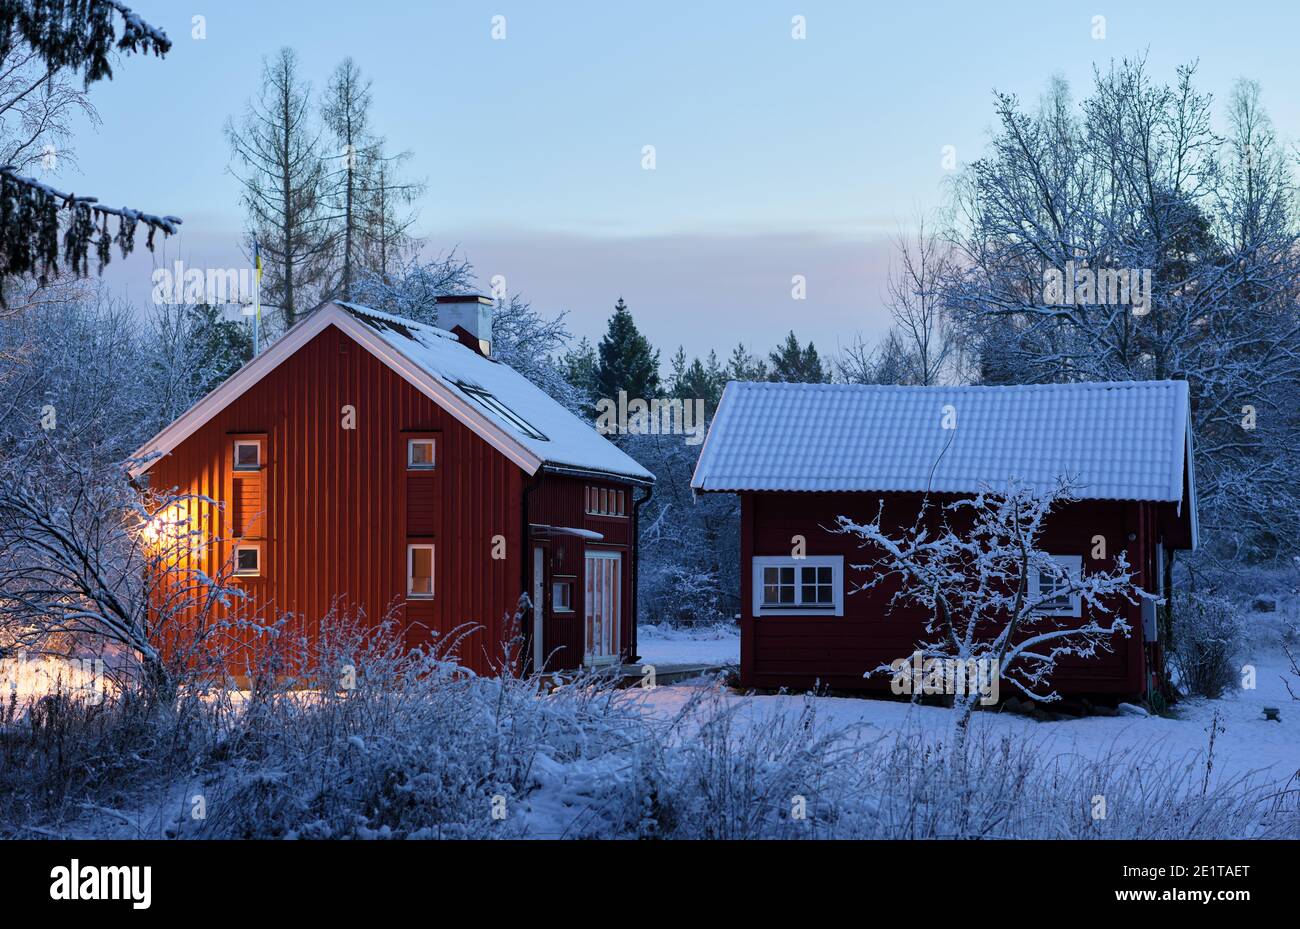 House in Sandvreten, Bogesundslandet, outside Vaxholm, Sweden, during a winter evening Stock Photo